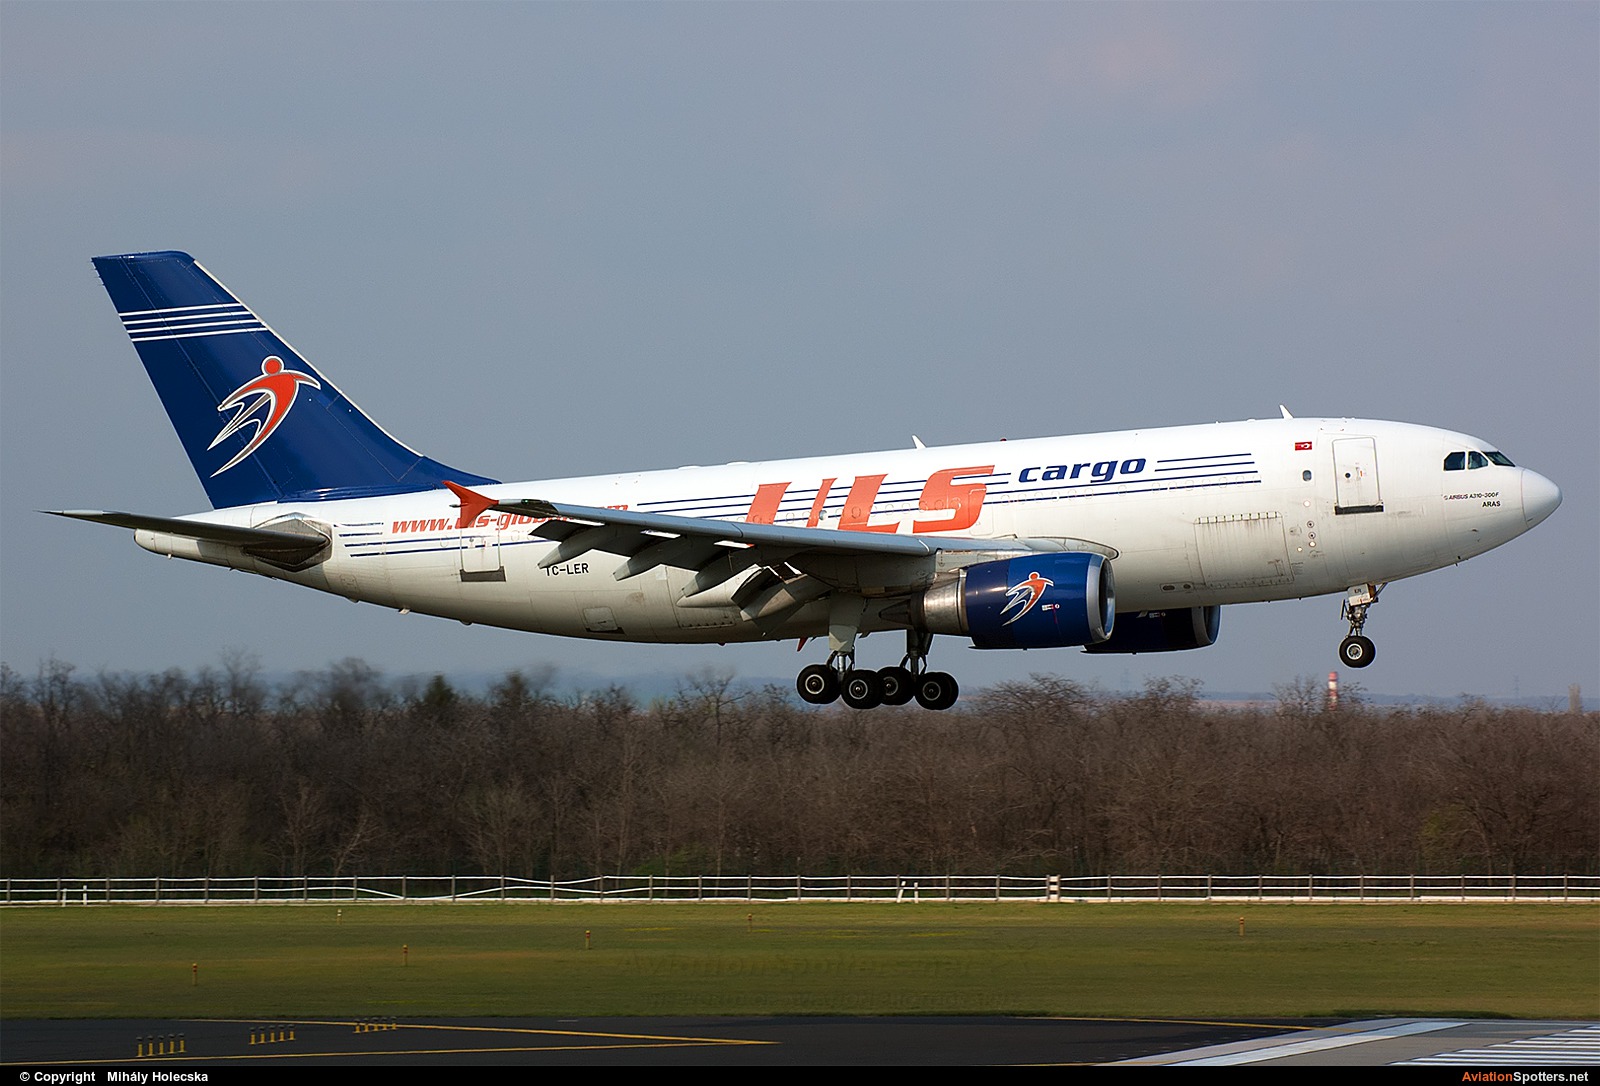 ULS Cargo  -  A310  (TC-LER) By Mihály Holecska (Misixx)